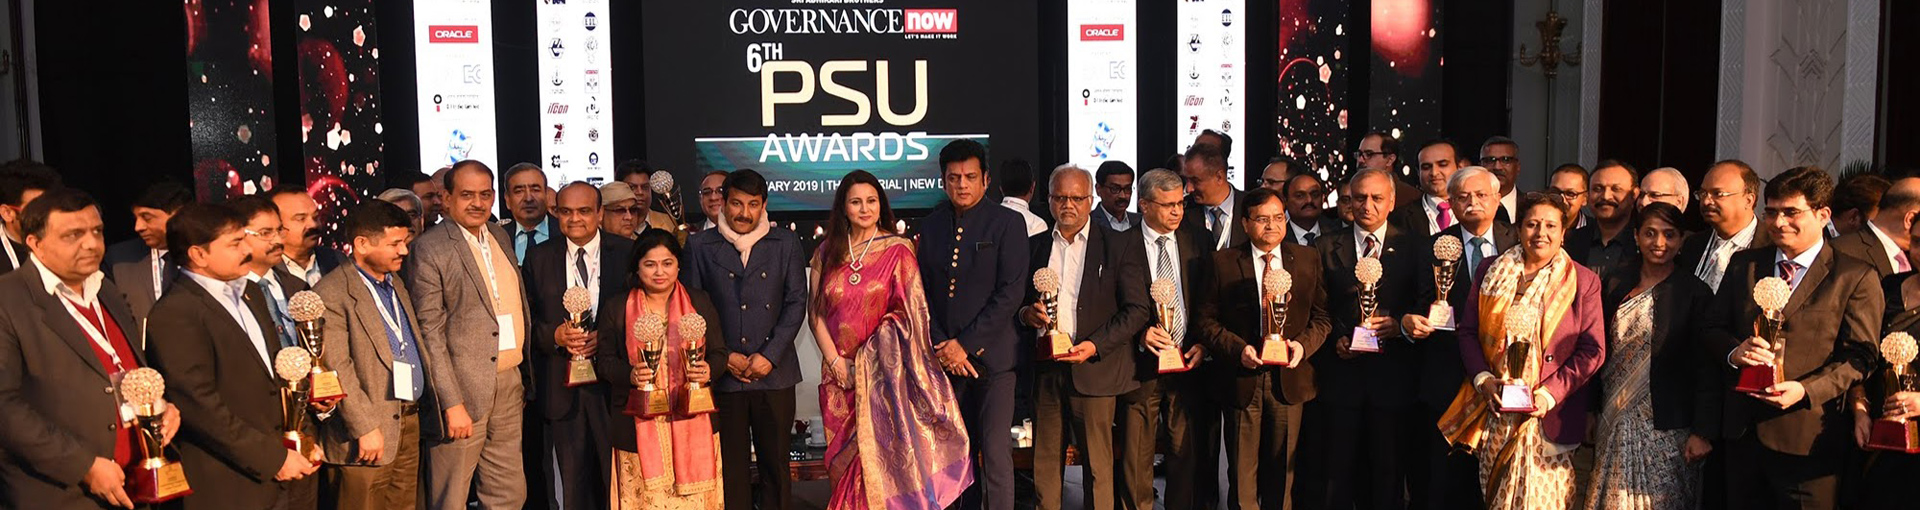 6th PSU Awards